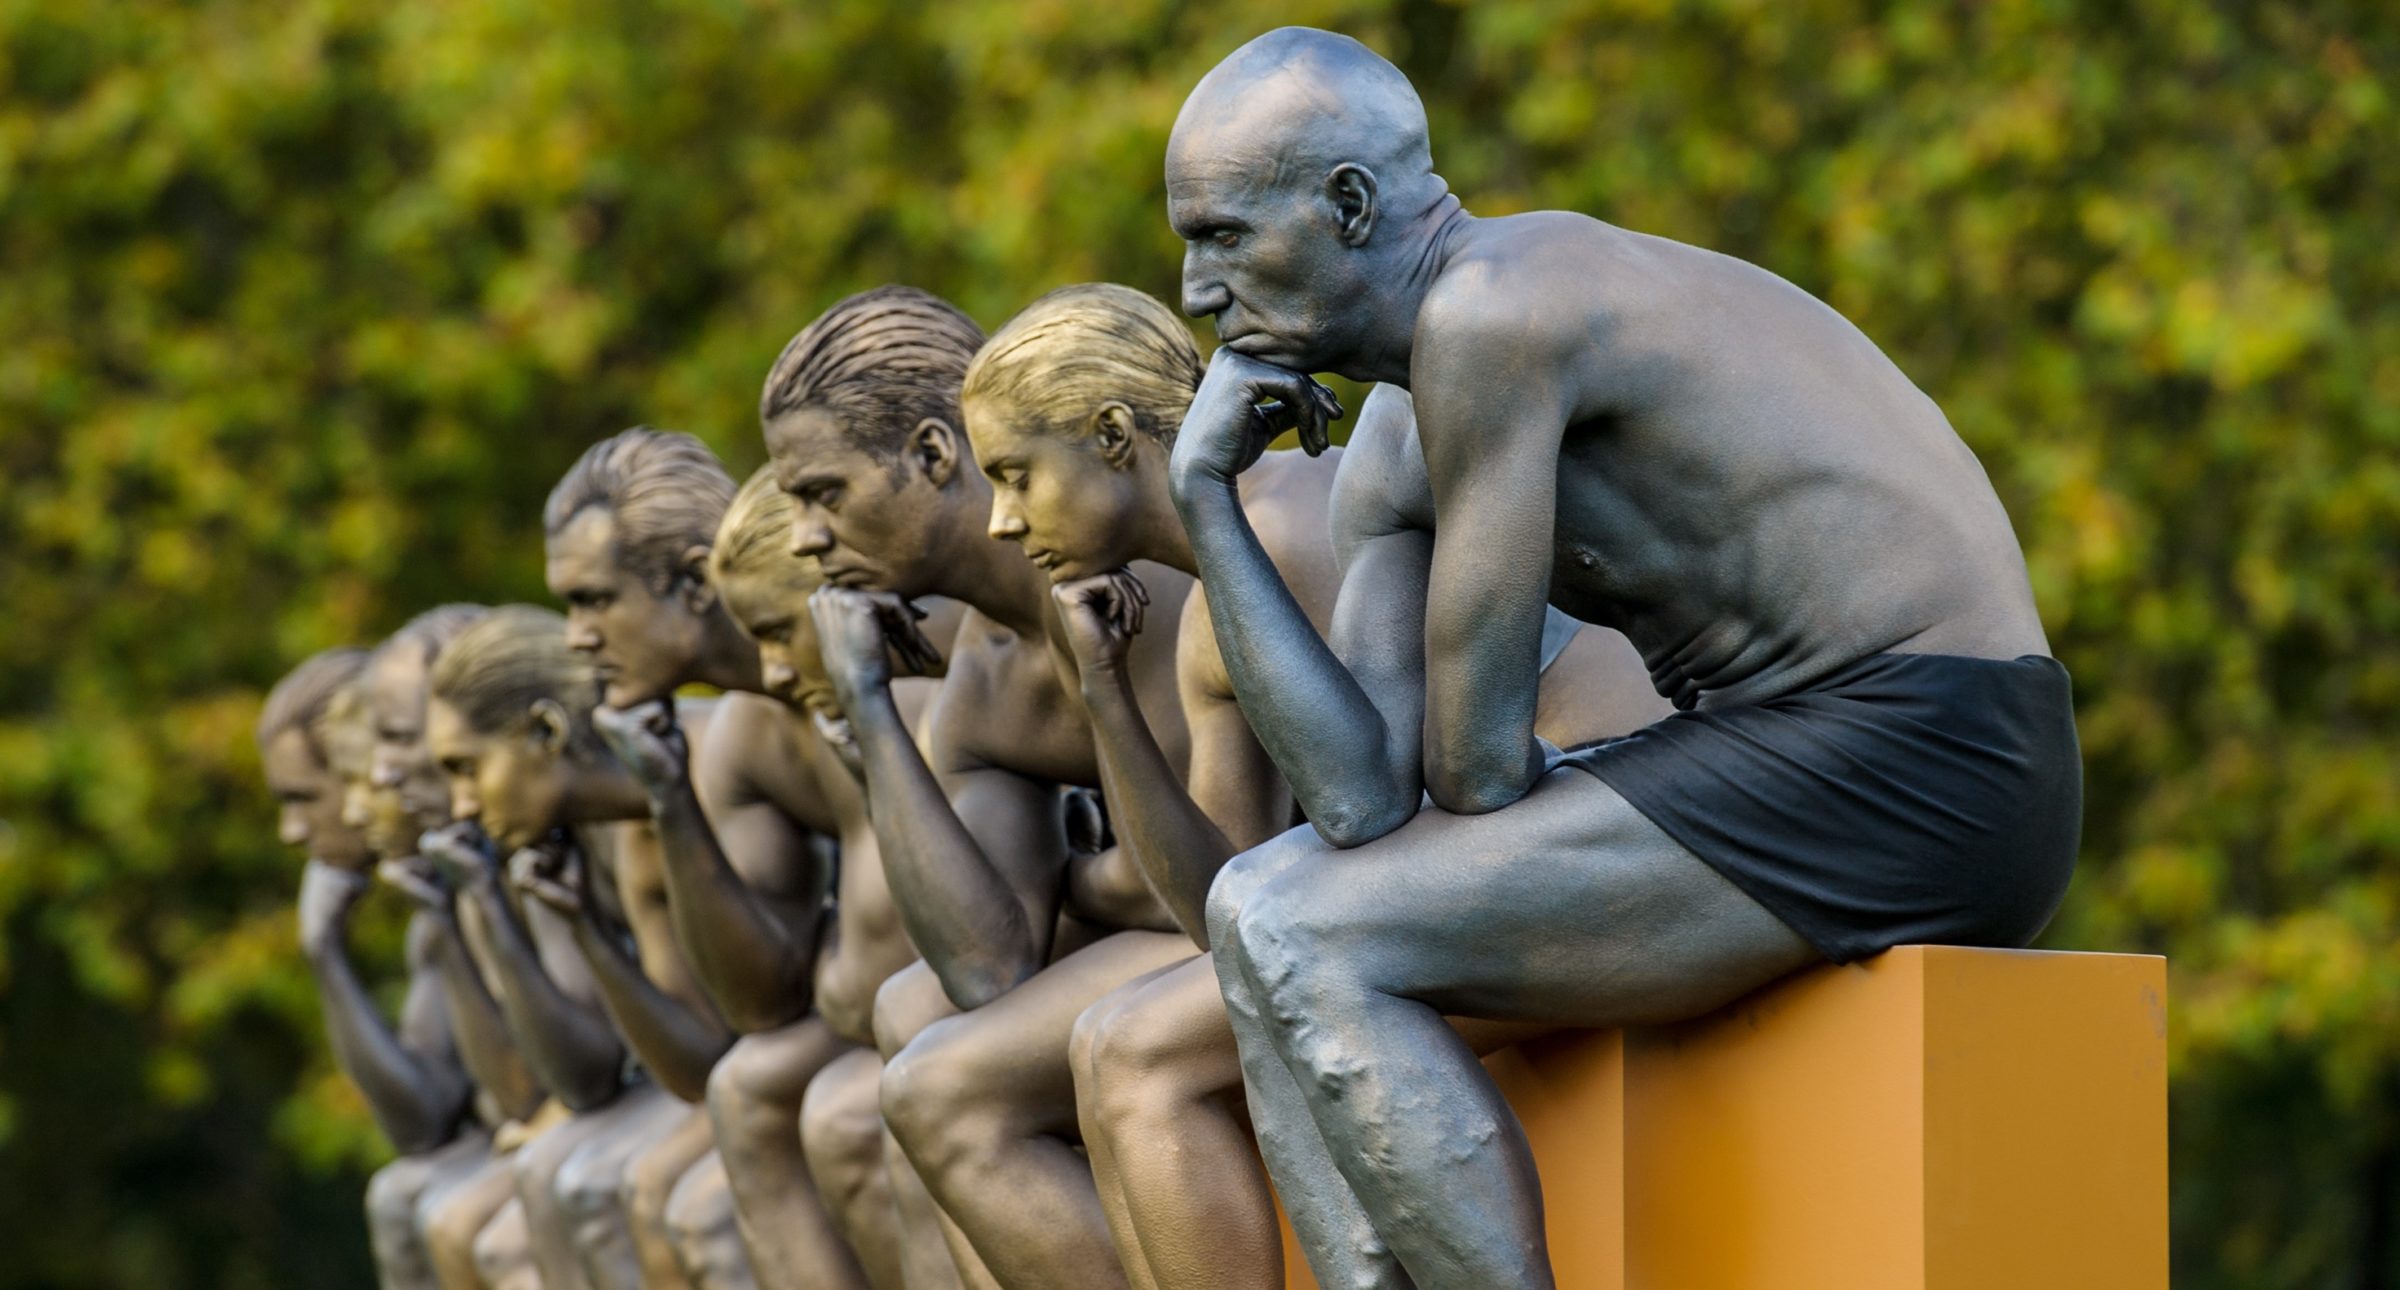 Nine models pose as Rodin's The Thinker